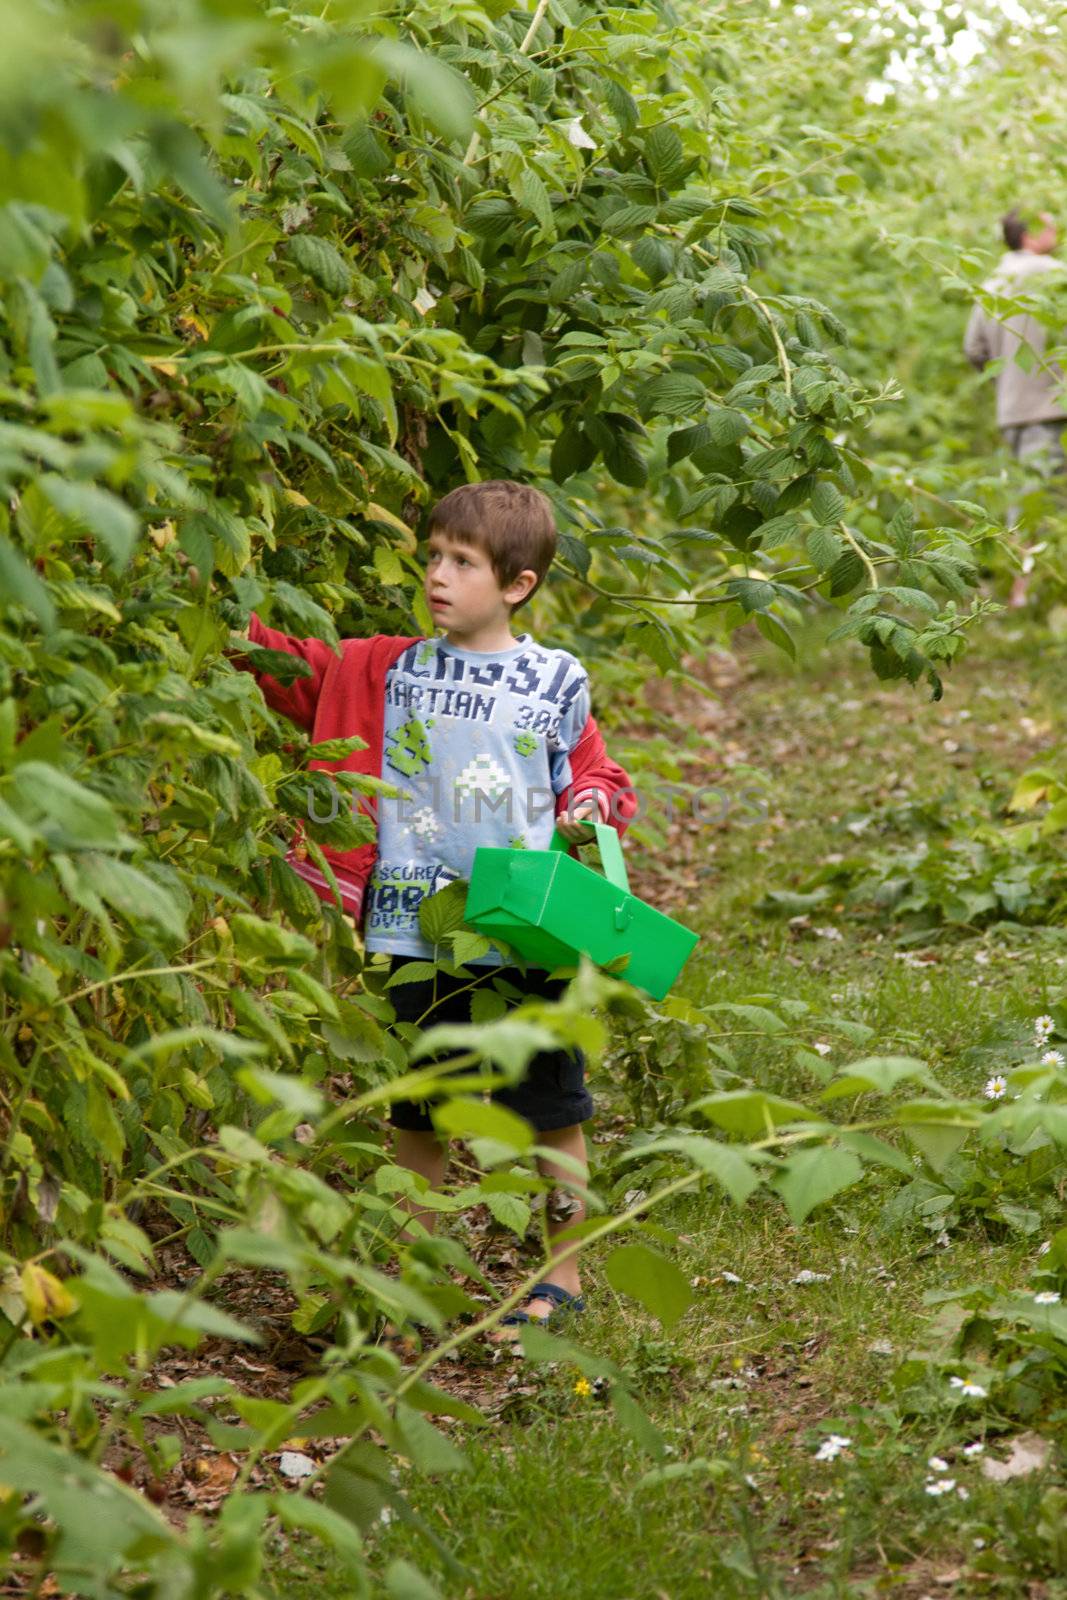 Boy holding a basket picking raspberries